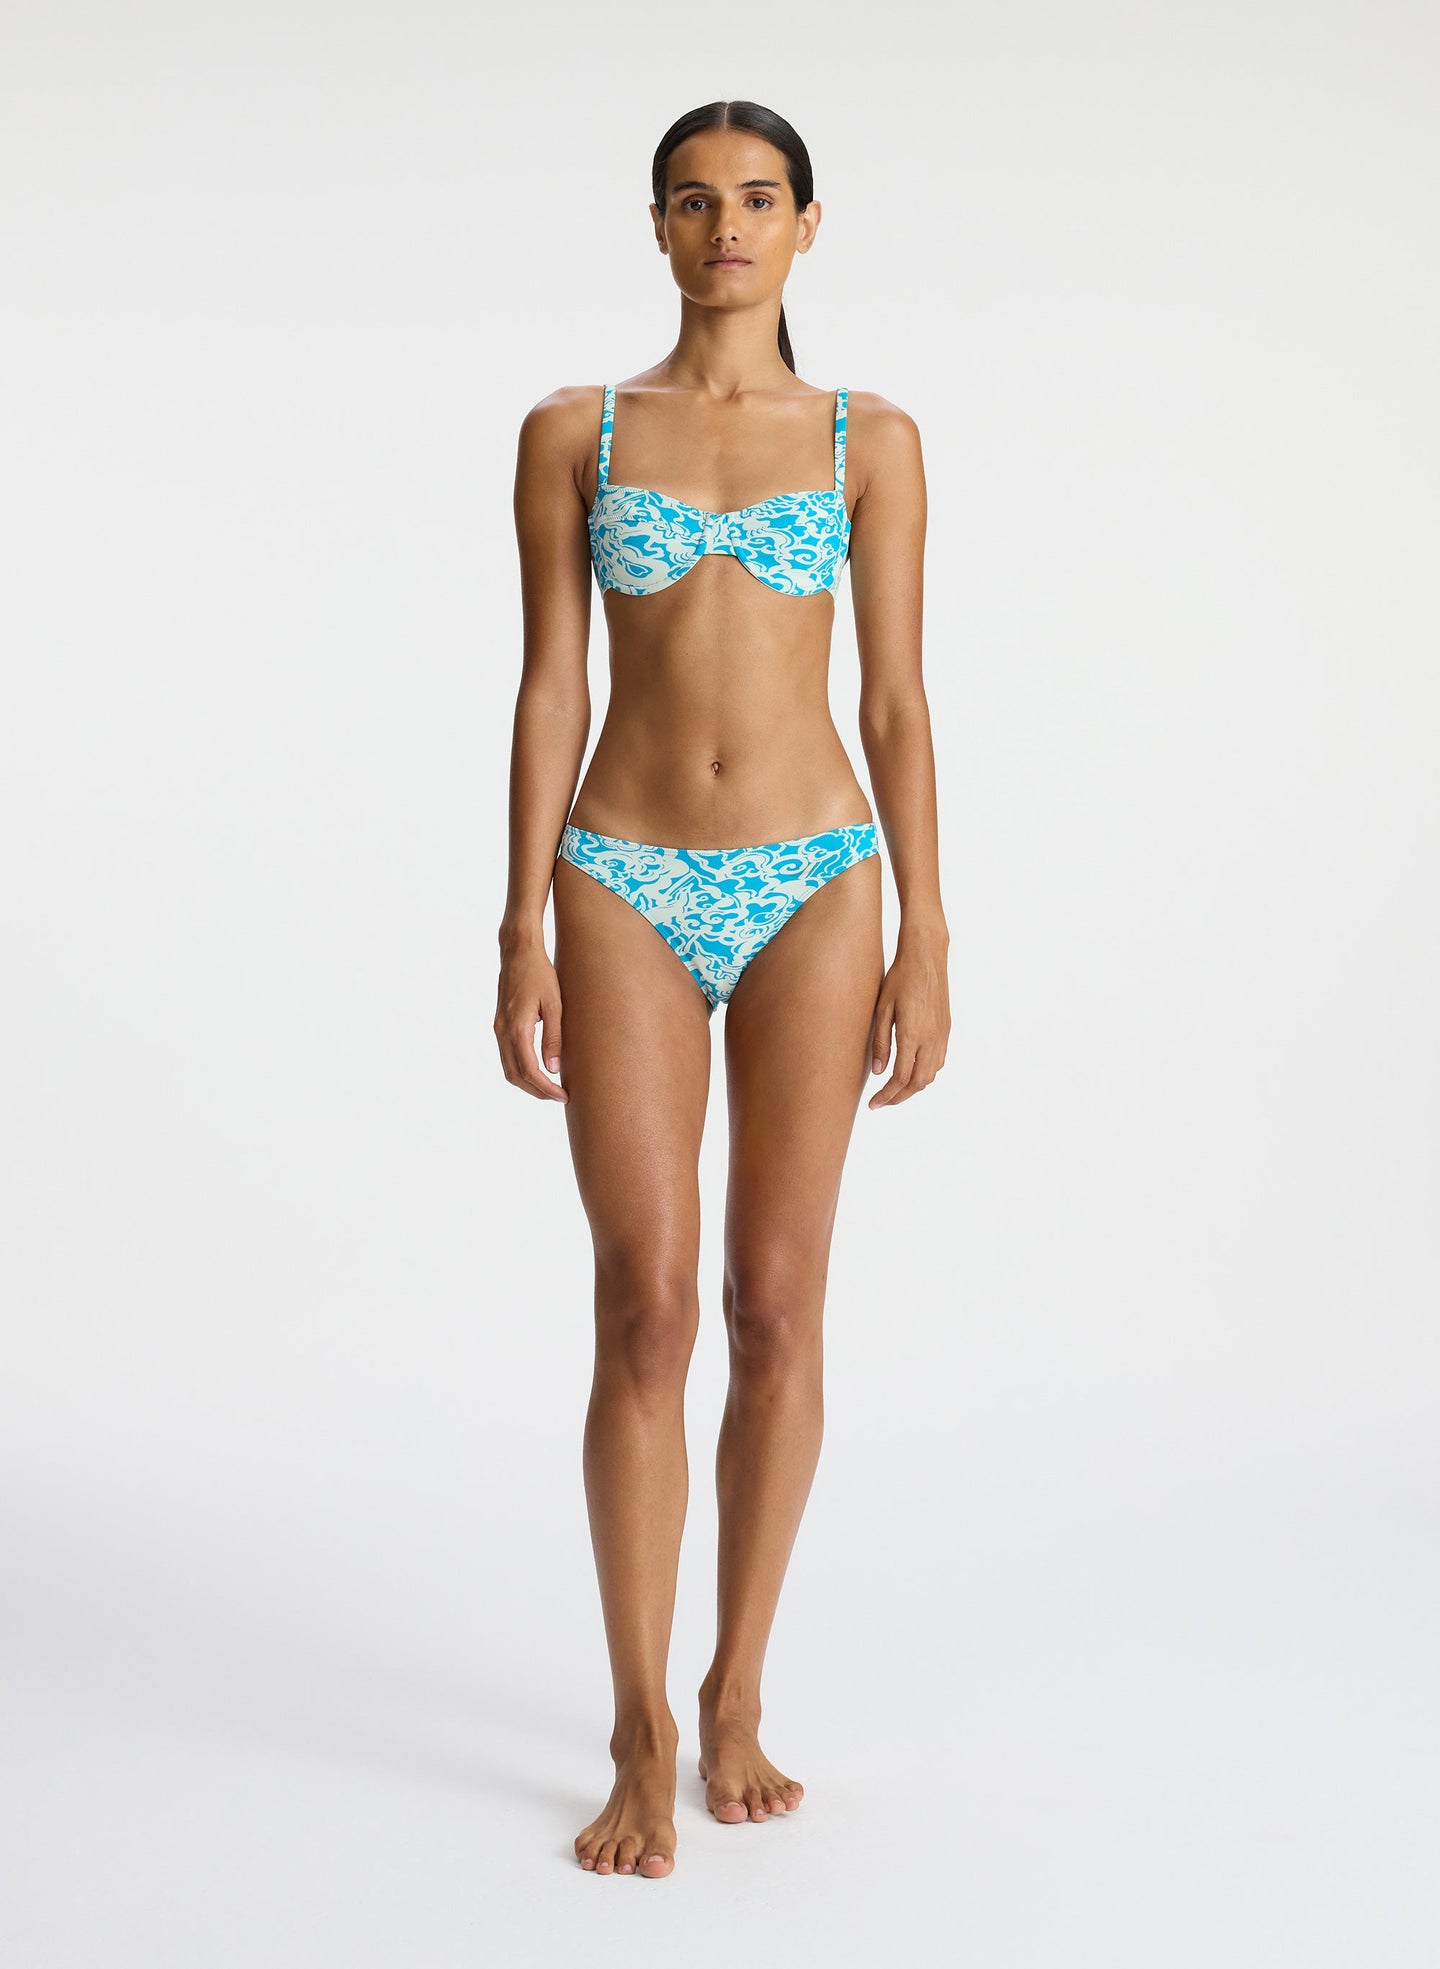 front view of woman wearing aqua printed bikini set